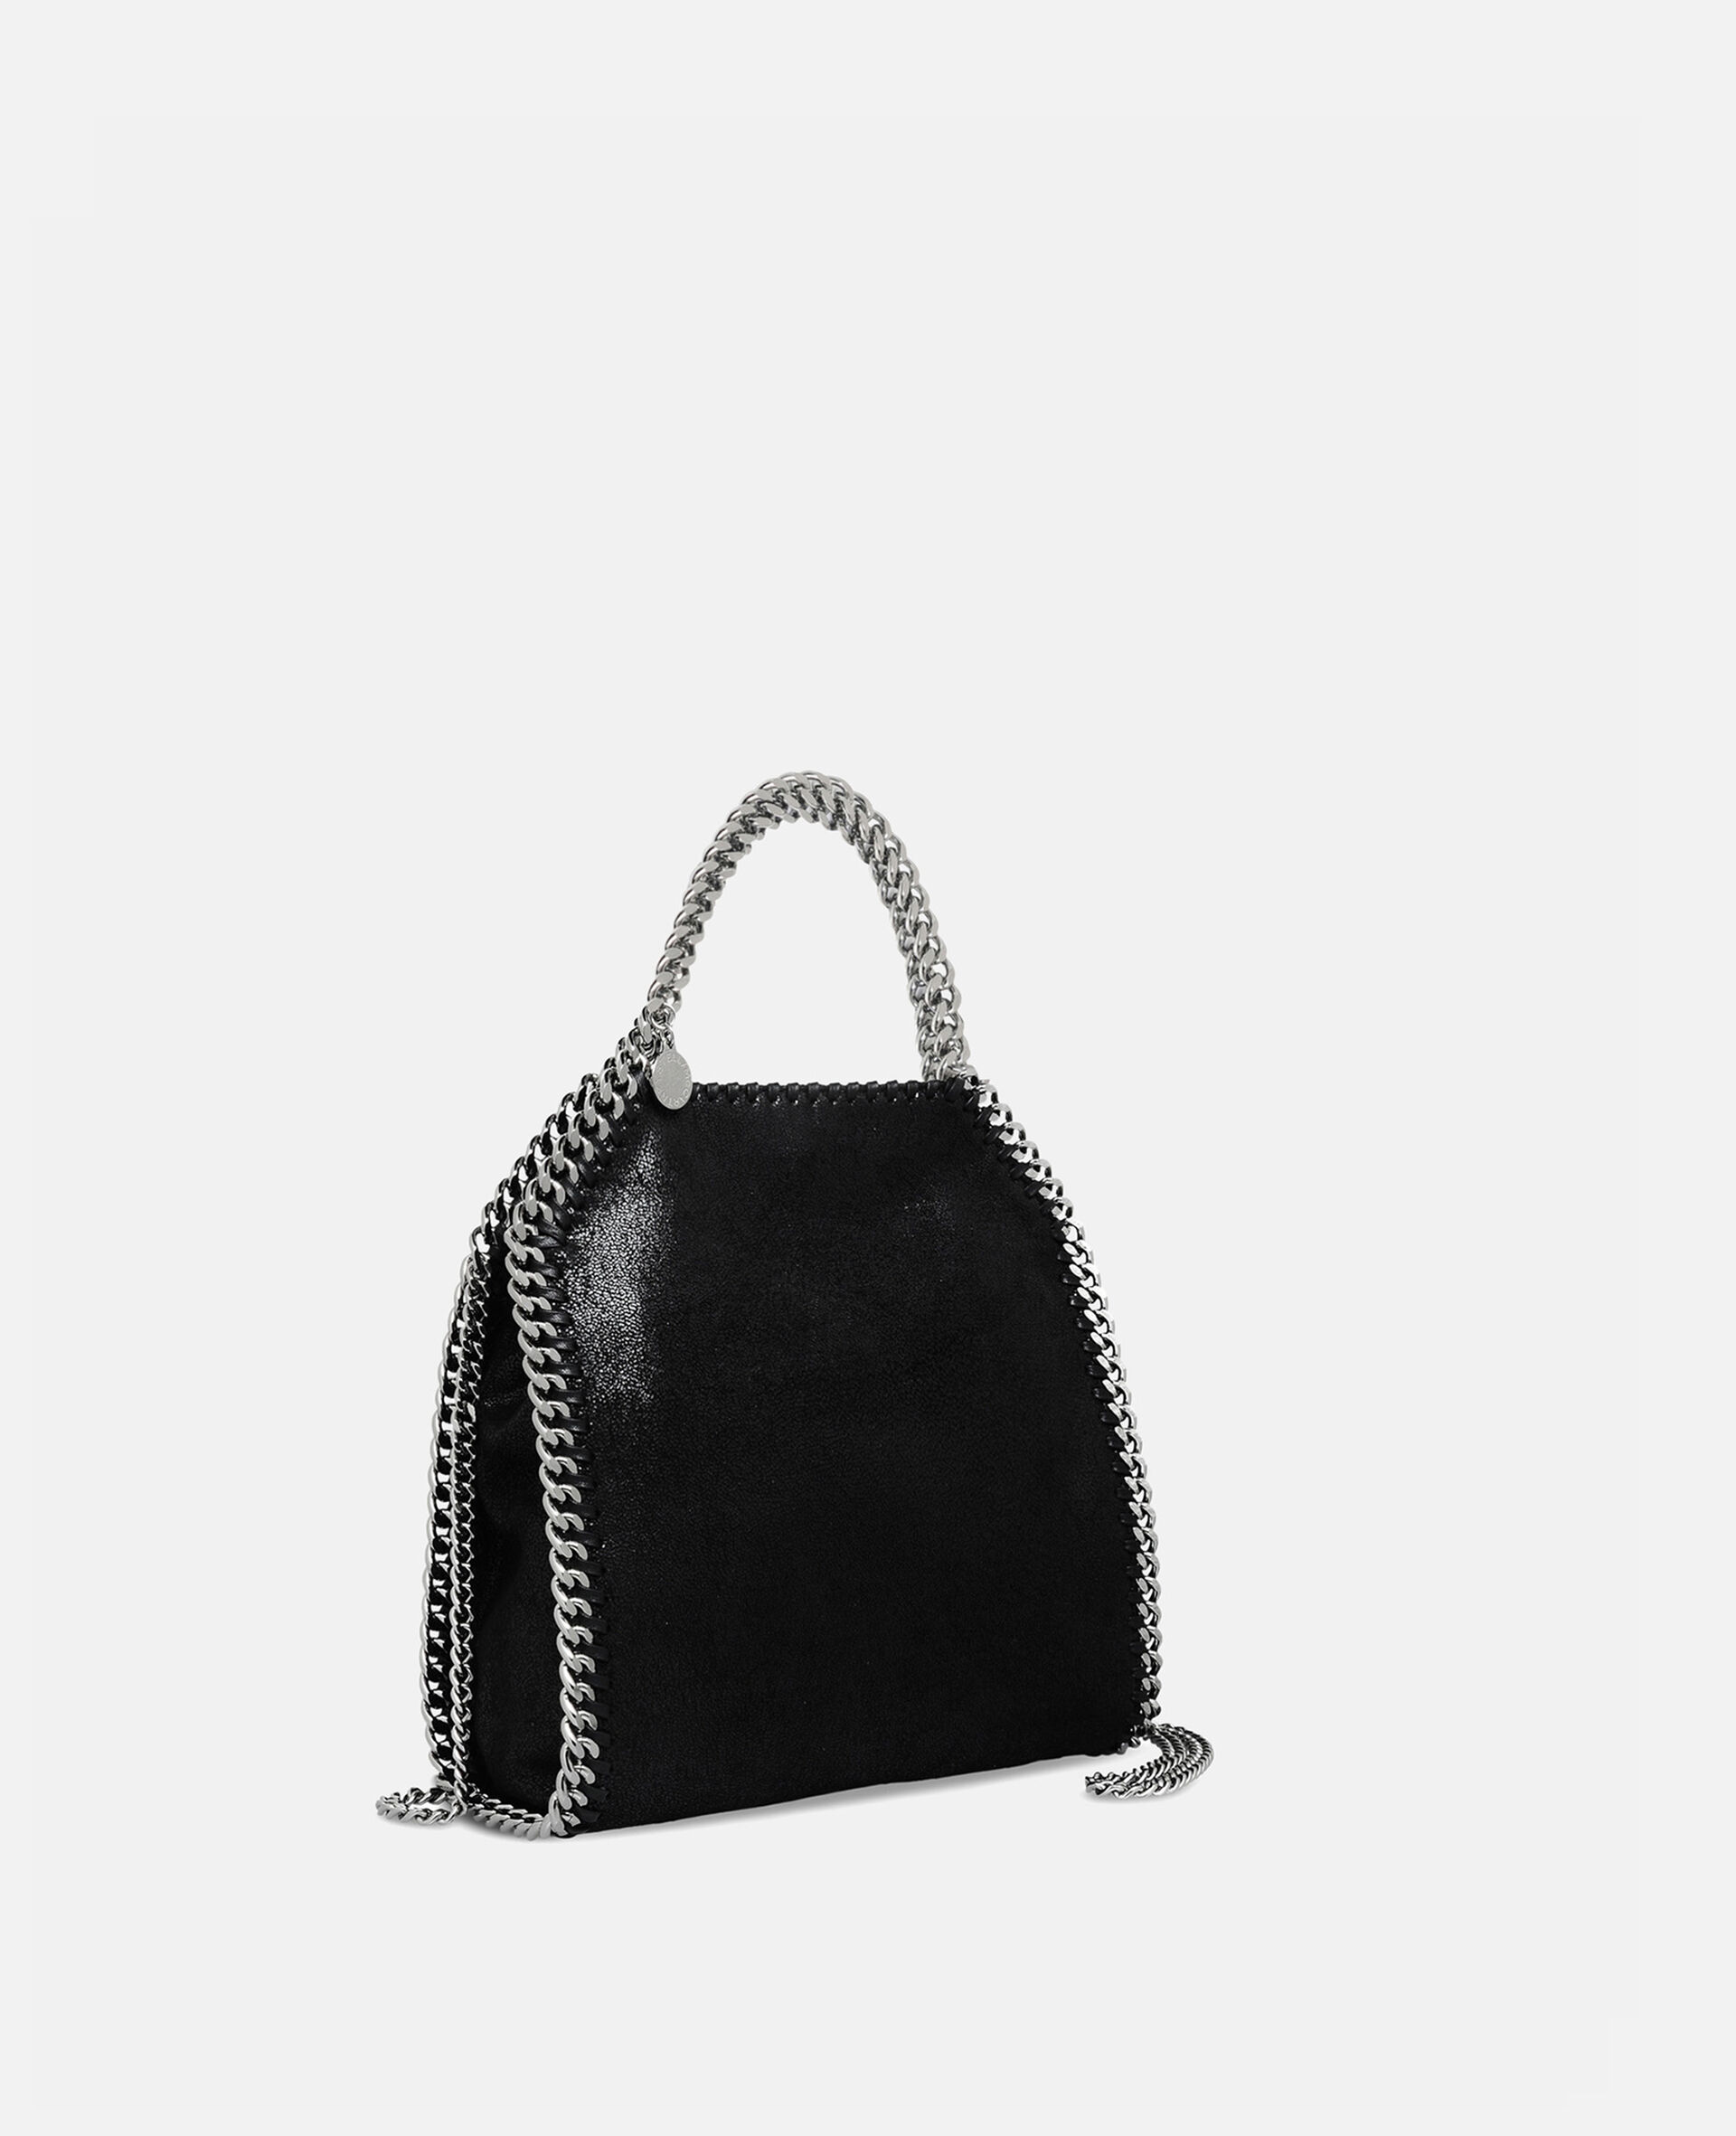 Stella McCartney Black Tiny Falabella Bag